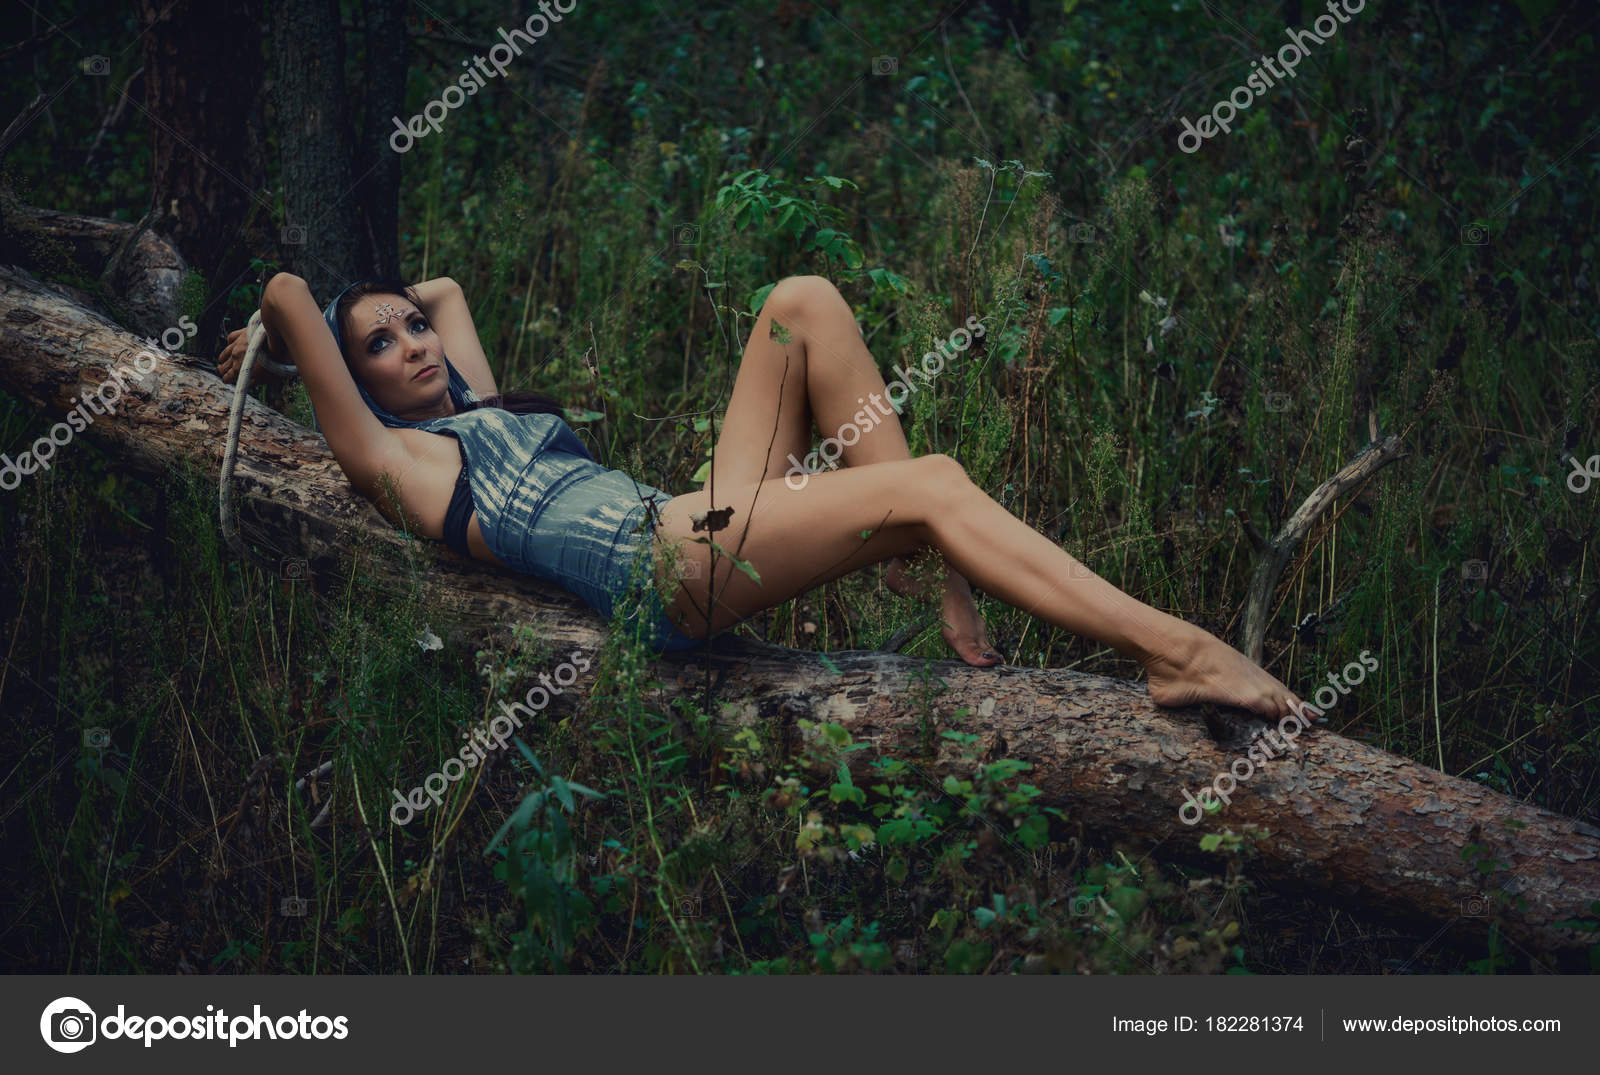 https://st3.depositphotos.com/6068344/18228/i/1600/depositphotos_182281374-stock-photo-girl-tied-tree-forest-fantasy.jpg